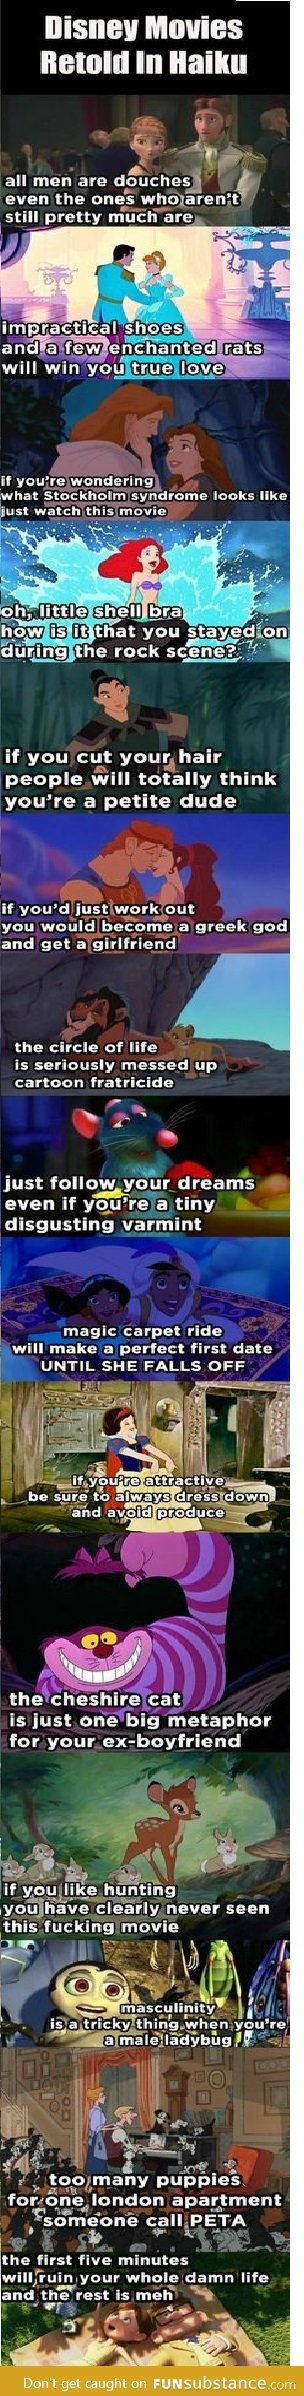 Disney Retold in Haiku